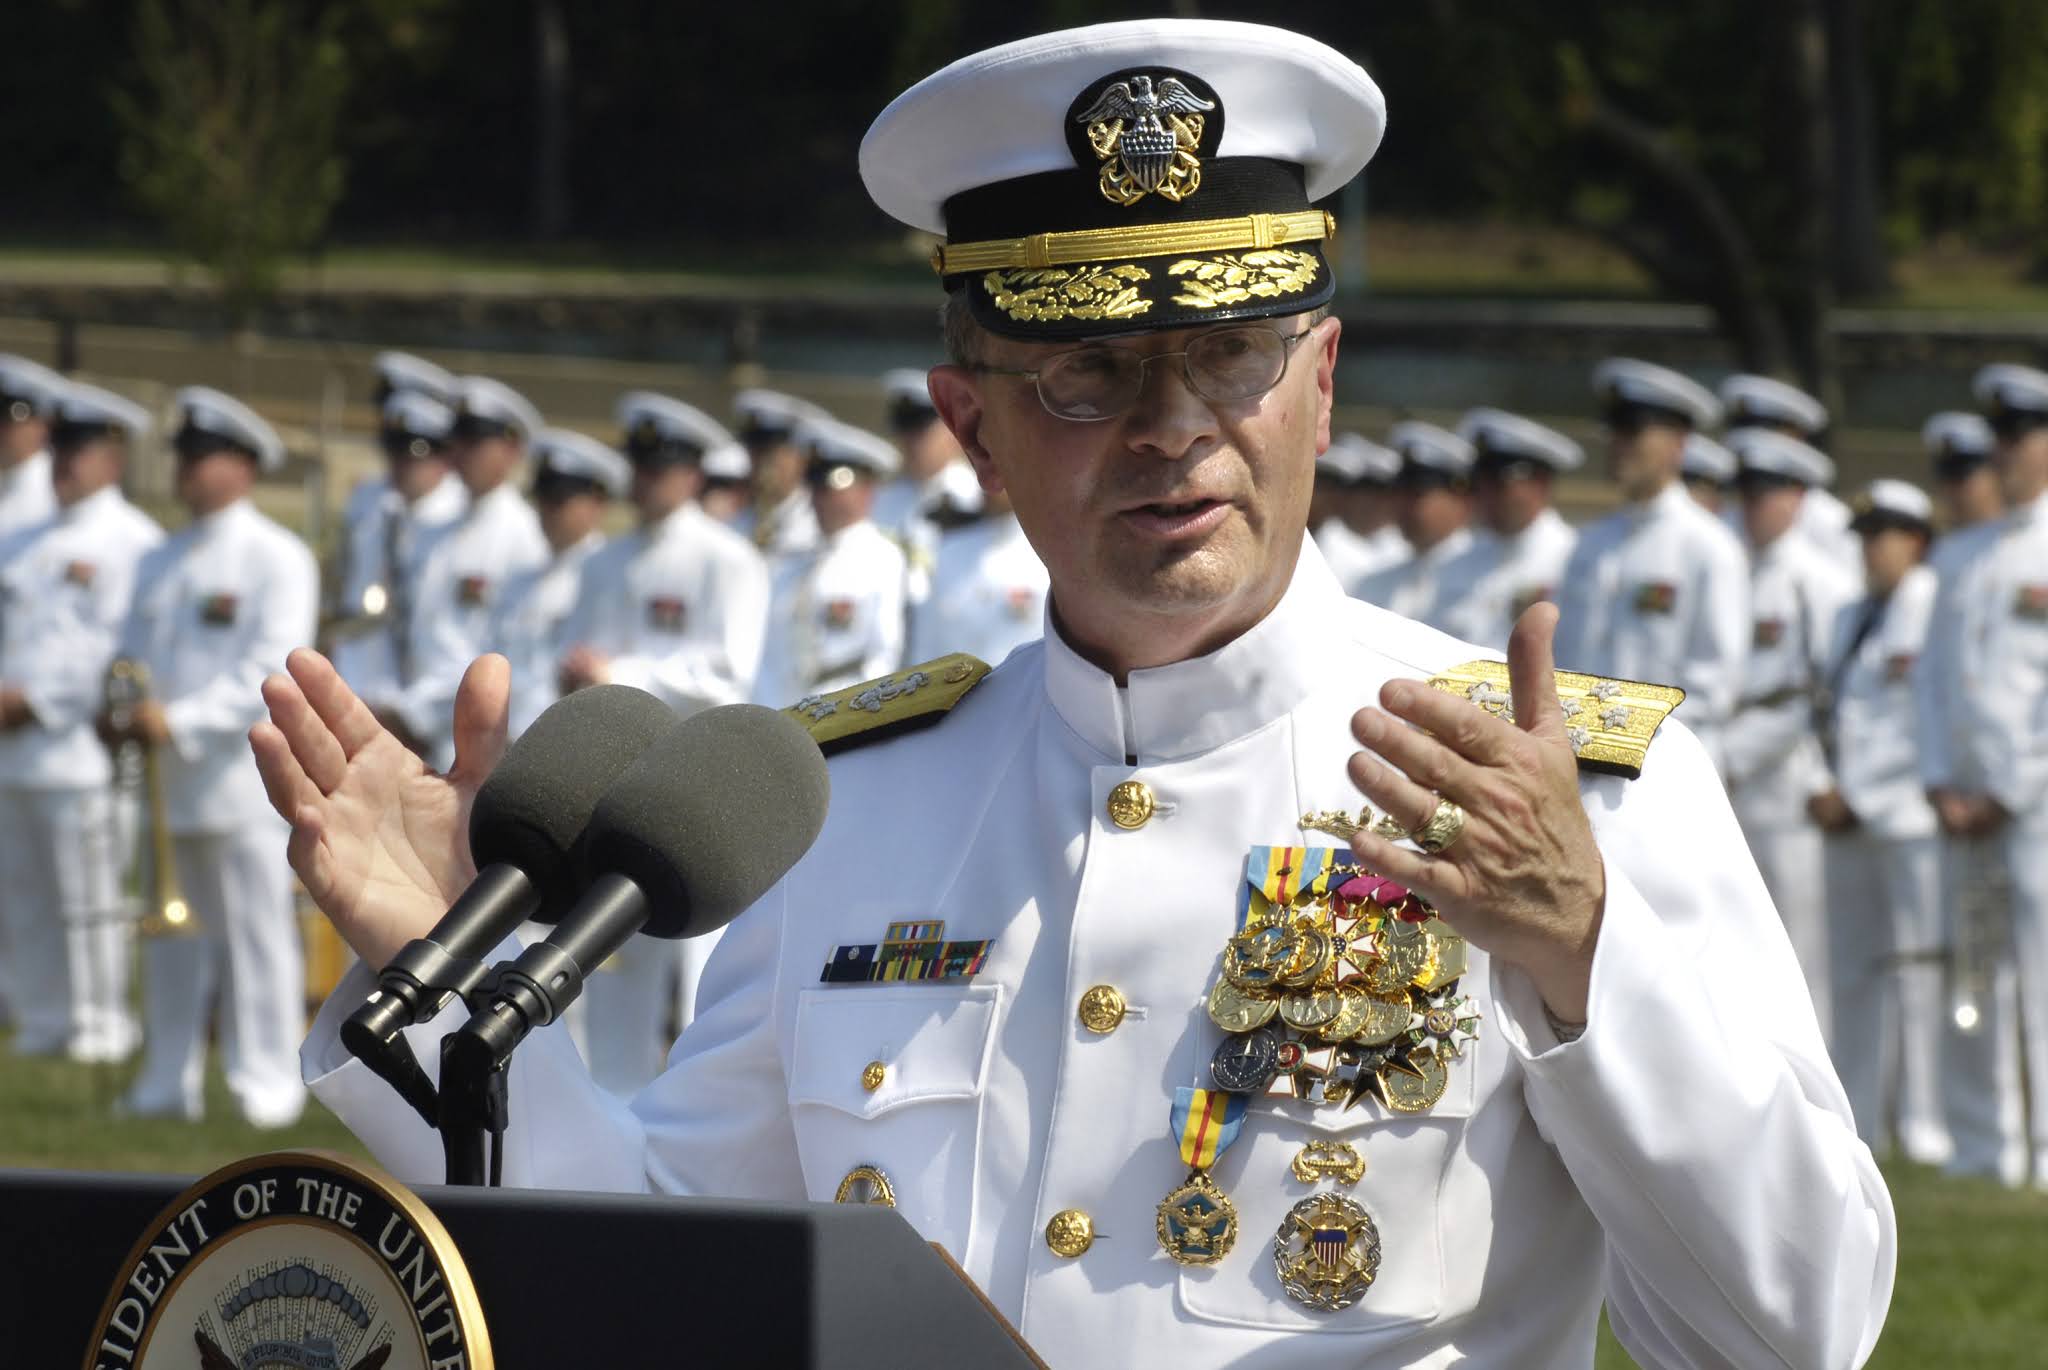 Вице-Адмирал ВМС США Эндрю Льюис. Вице адмиралы ВМС США. Парадная форма офицера ВМС США. Адмирал флота США.